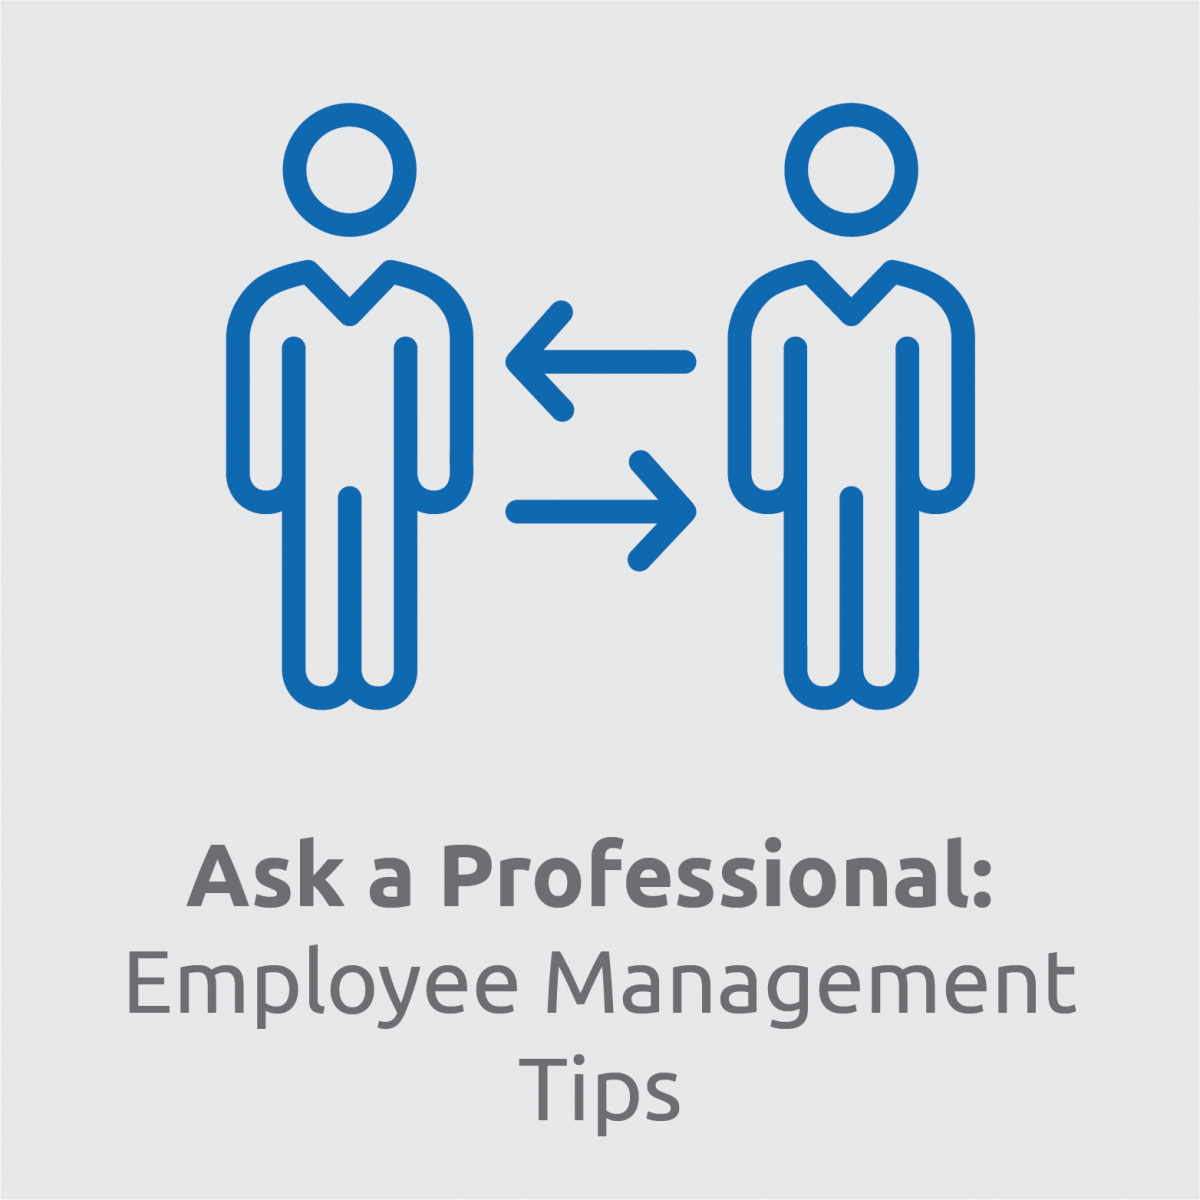 Employee Management Tips